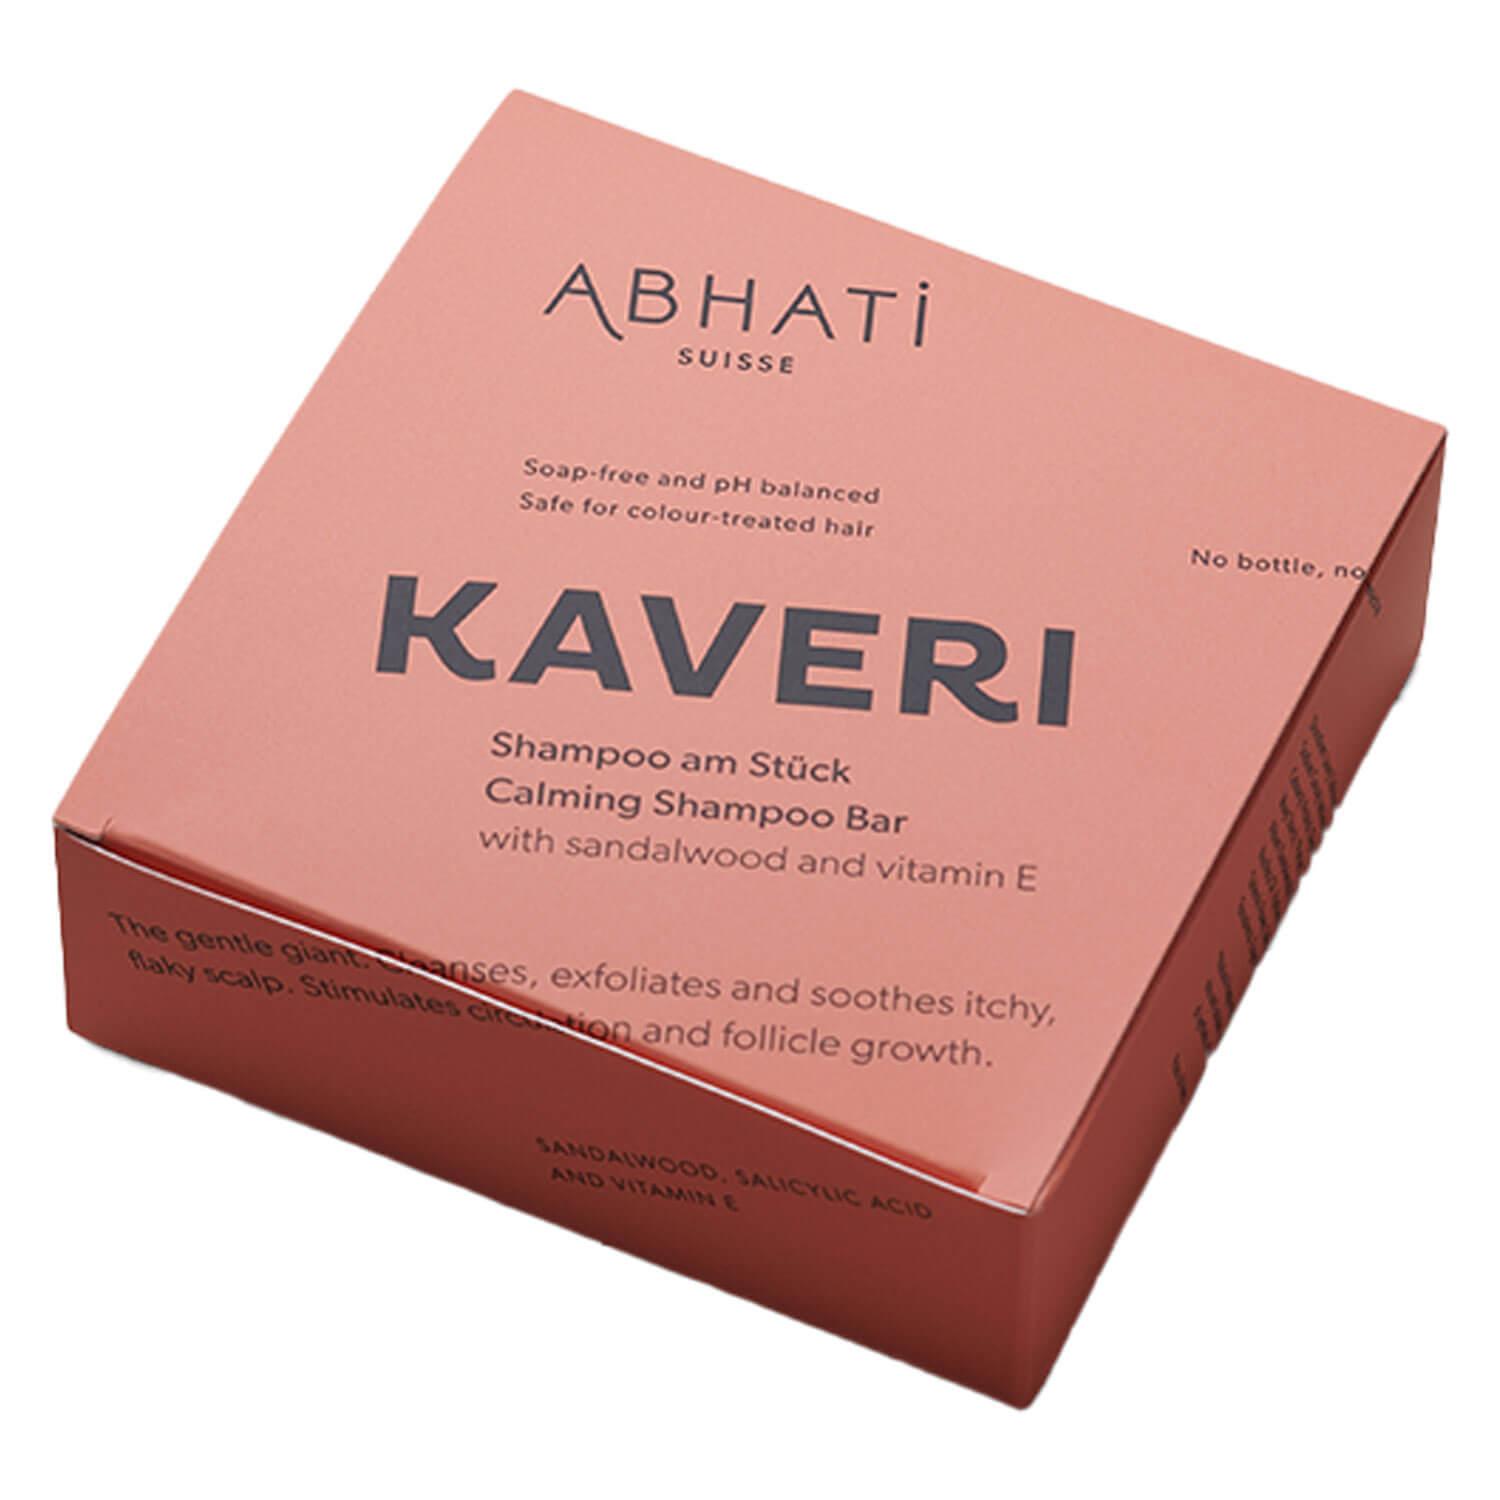 ABHATI Suisse - Kaveri Calming Shampoo Bar